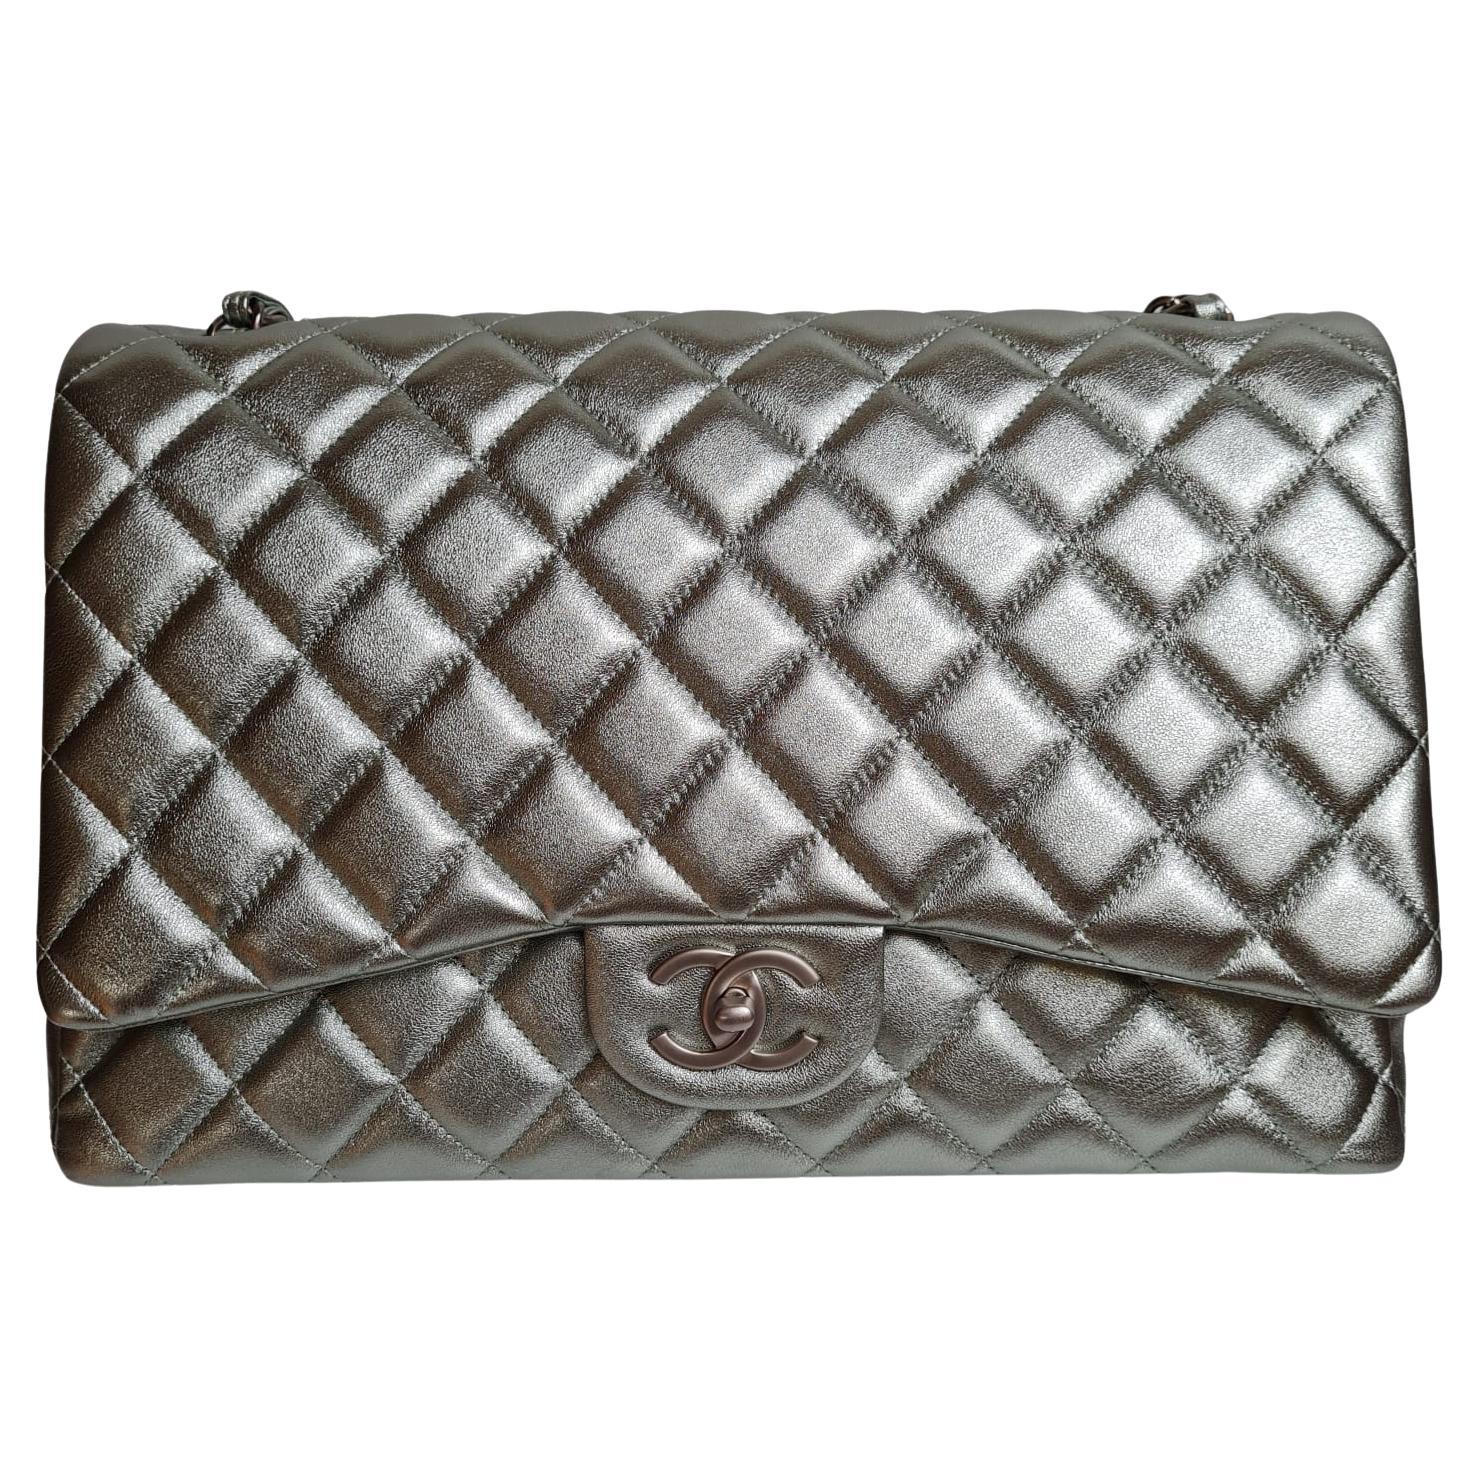 Chanel Metallic Silver Quilted Aged Calfskin Jumbo Chain Single Flap Ruthenium Hardware, 2012 (Like New), Womens Handbag